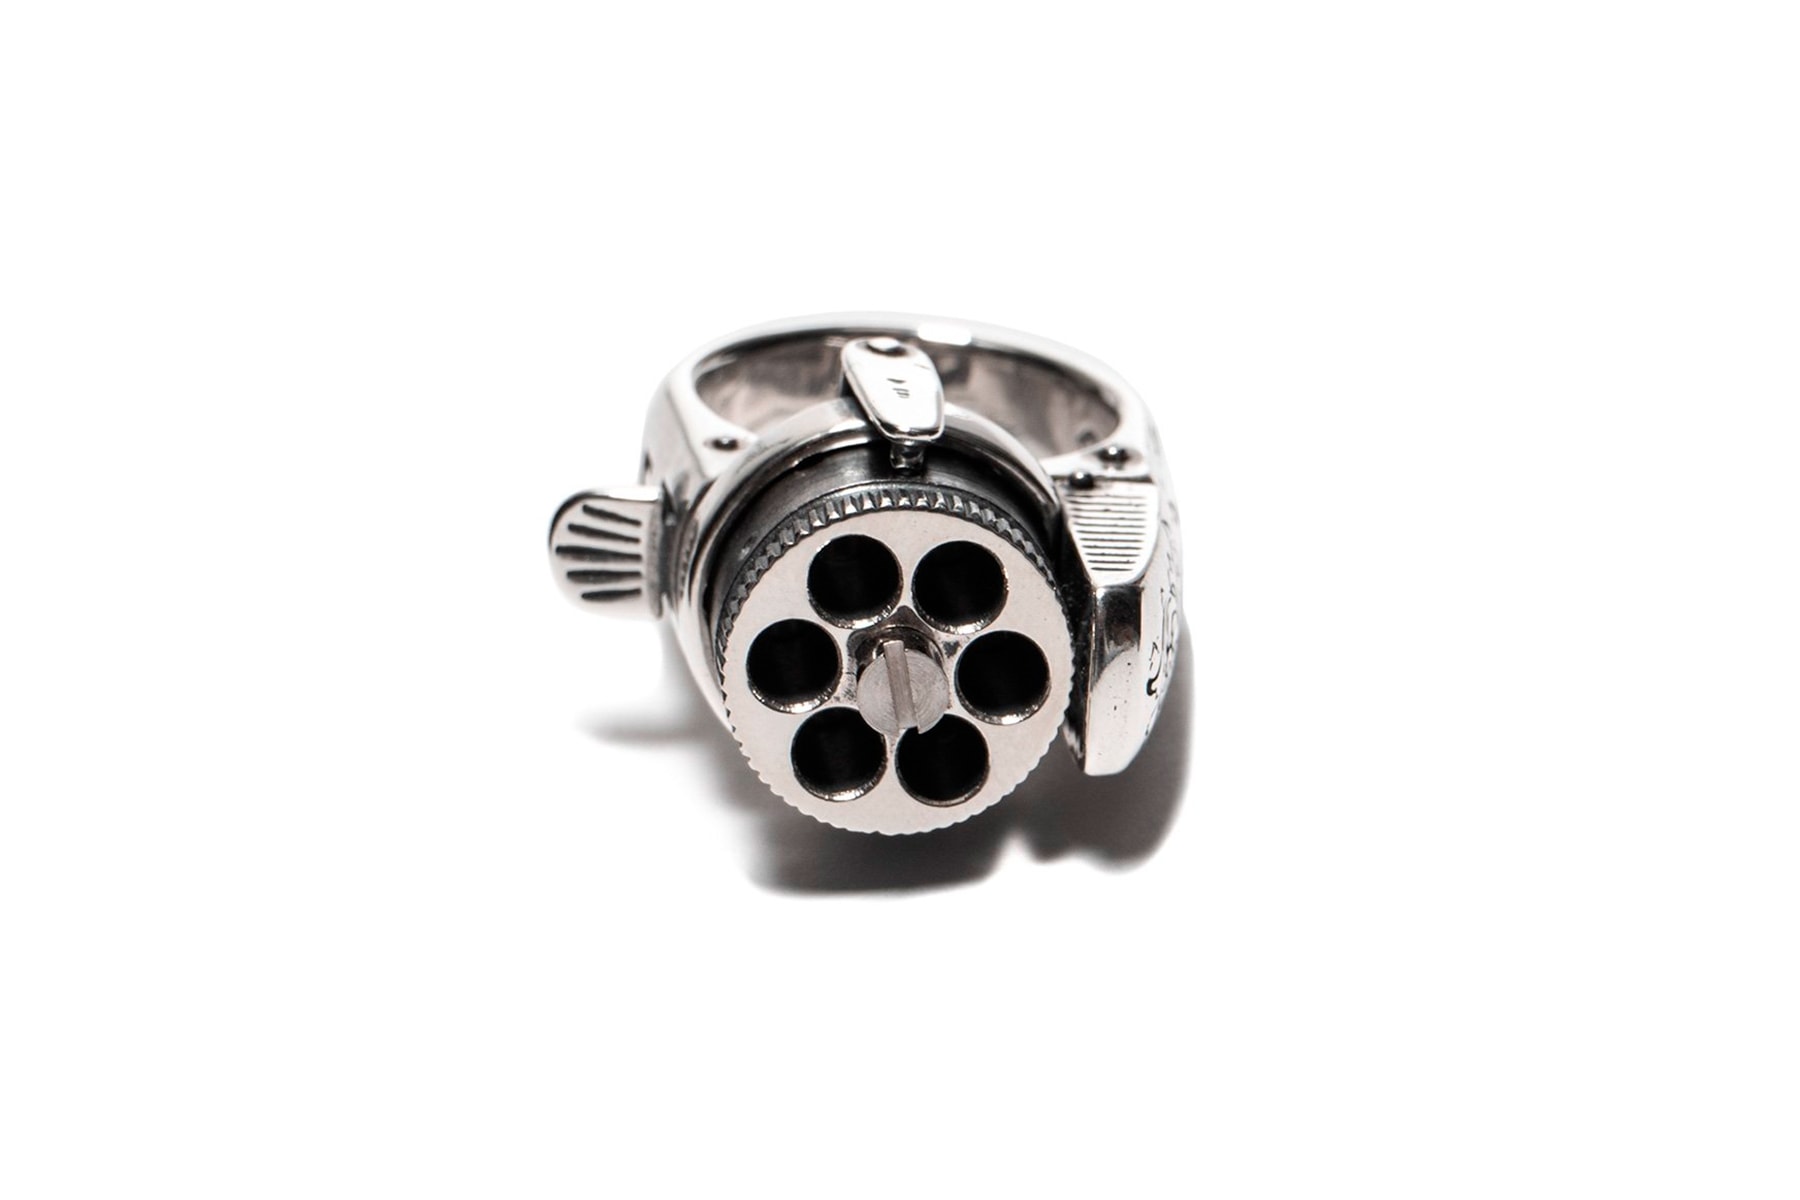 TAKAHIROMIYASHITA The SoloIst. Femme Fatale Ring accessories jewellery silver western revolver